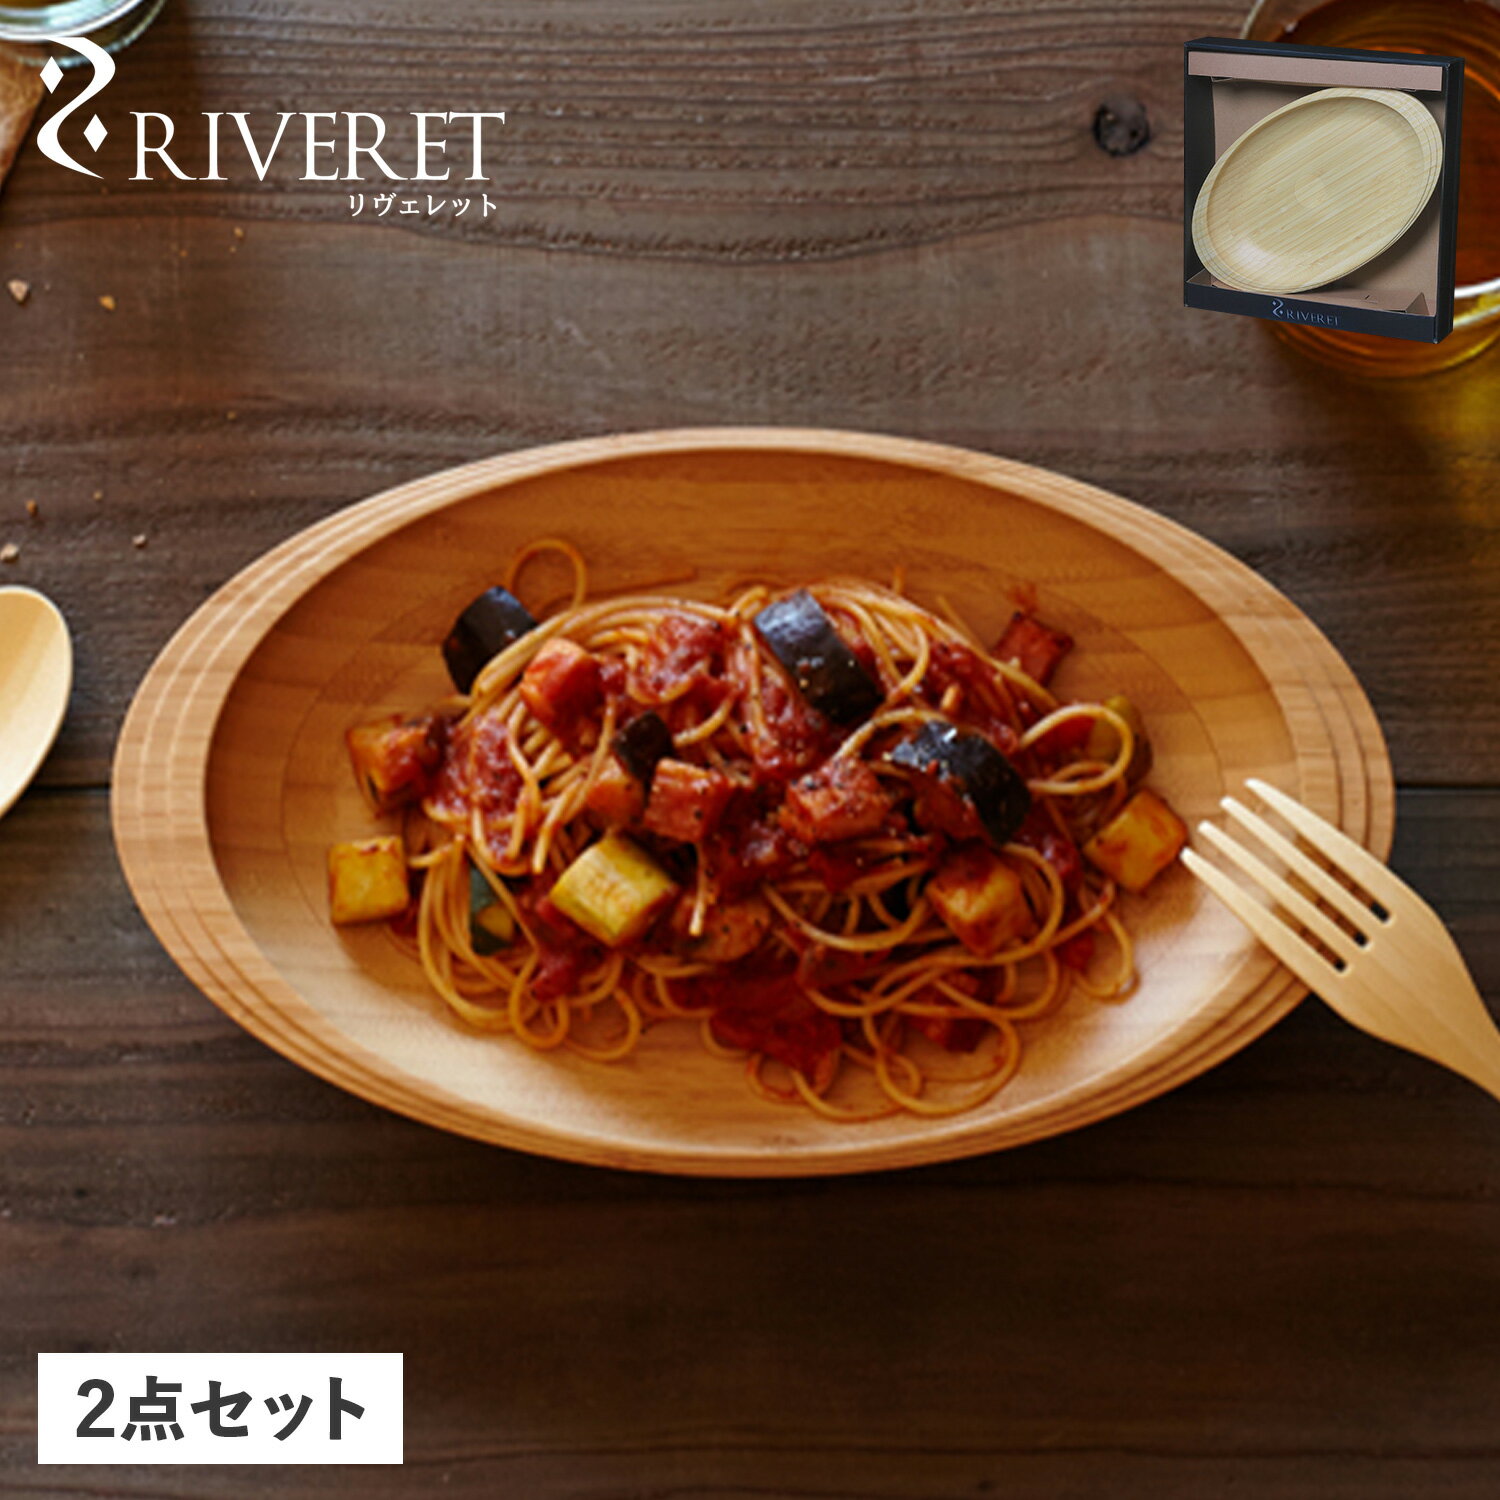 RIVERET リヴェレット 食器 皿 パスタプレート ペア 2点セット 天然素材 日本製 軽量 食洗器対応 リベレット PASTA PLATE PAIR ホワイト ブラウン 白 RV-402WB 母の日